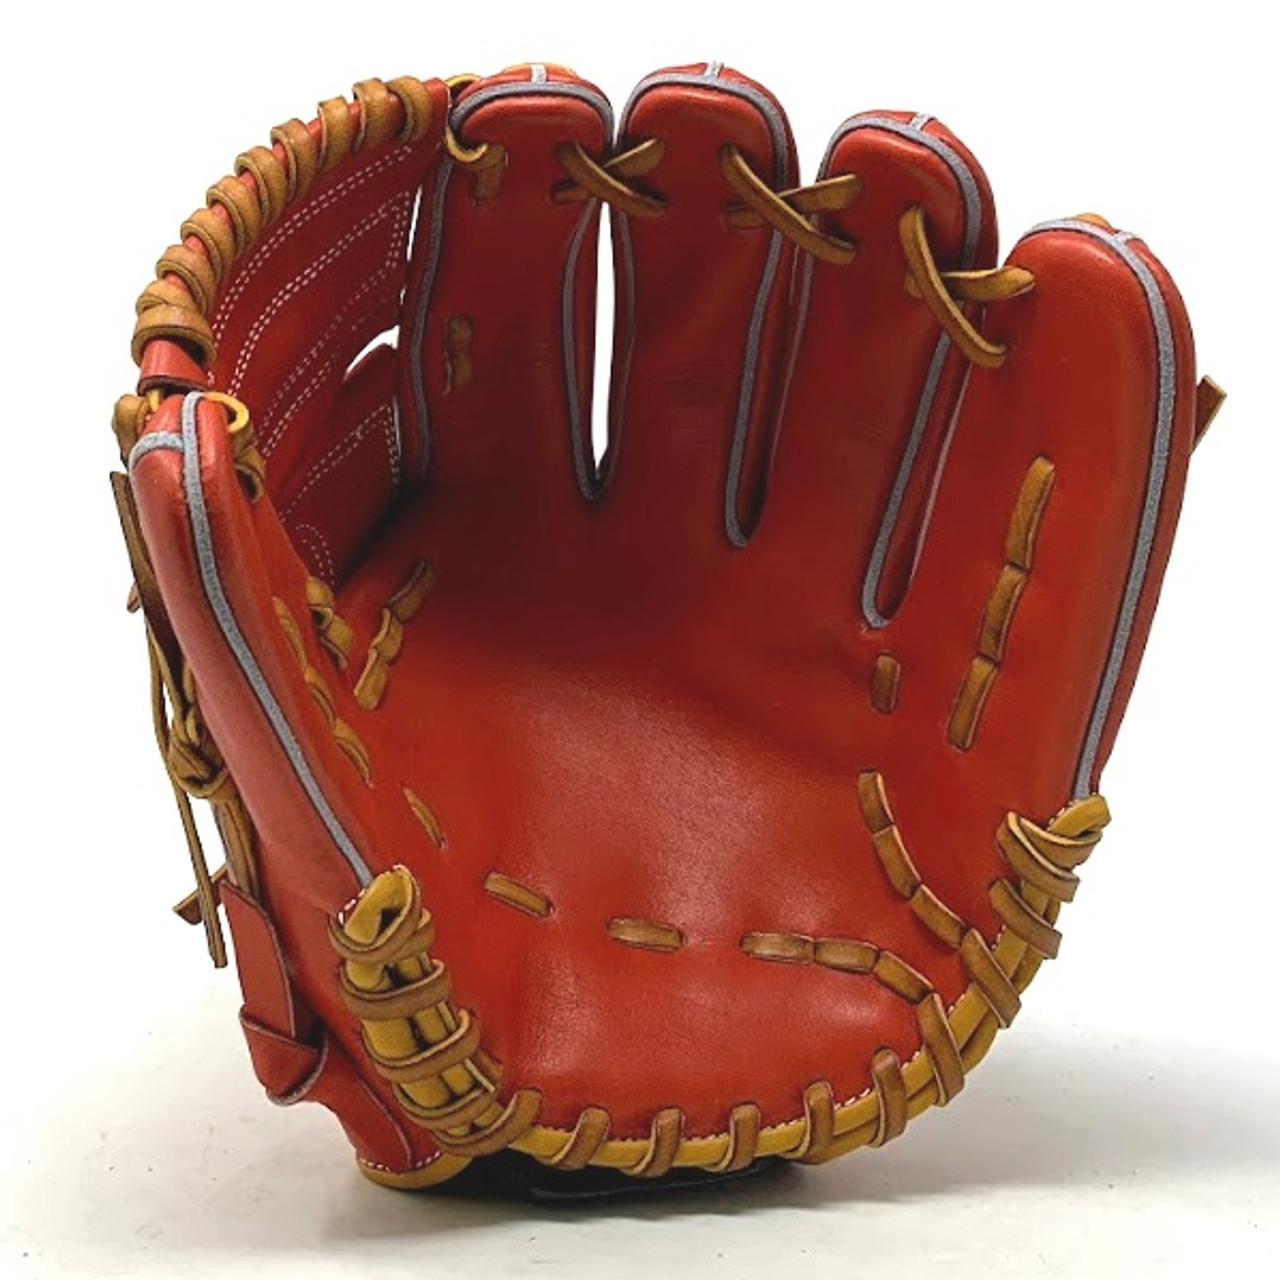 Warstic IK3 Ian Kinsler Bison 12.75 Outfield Baseball Glove